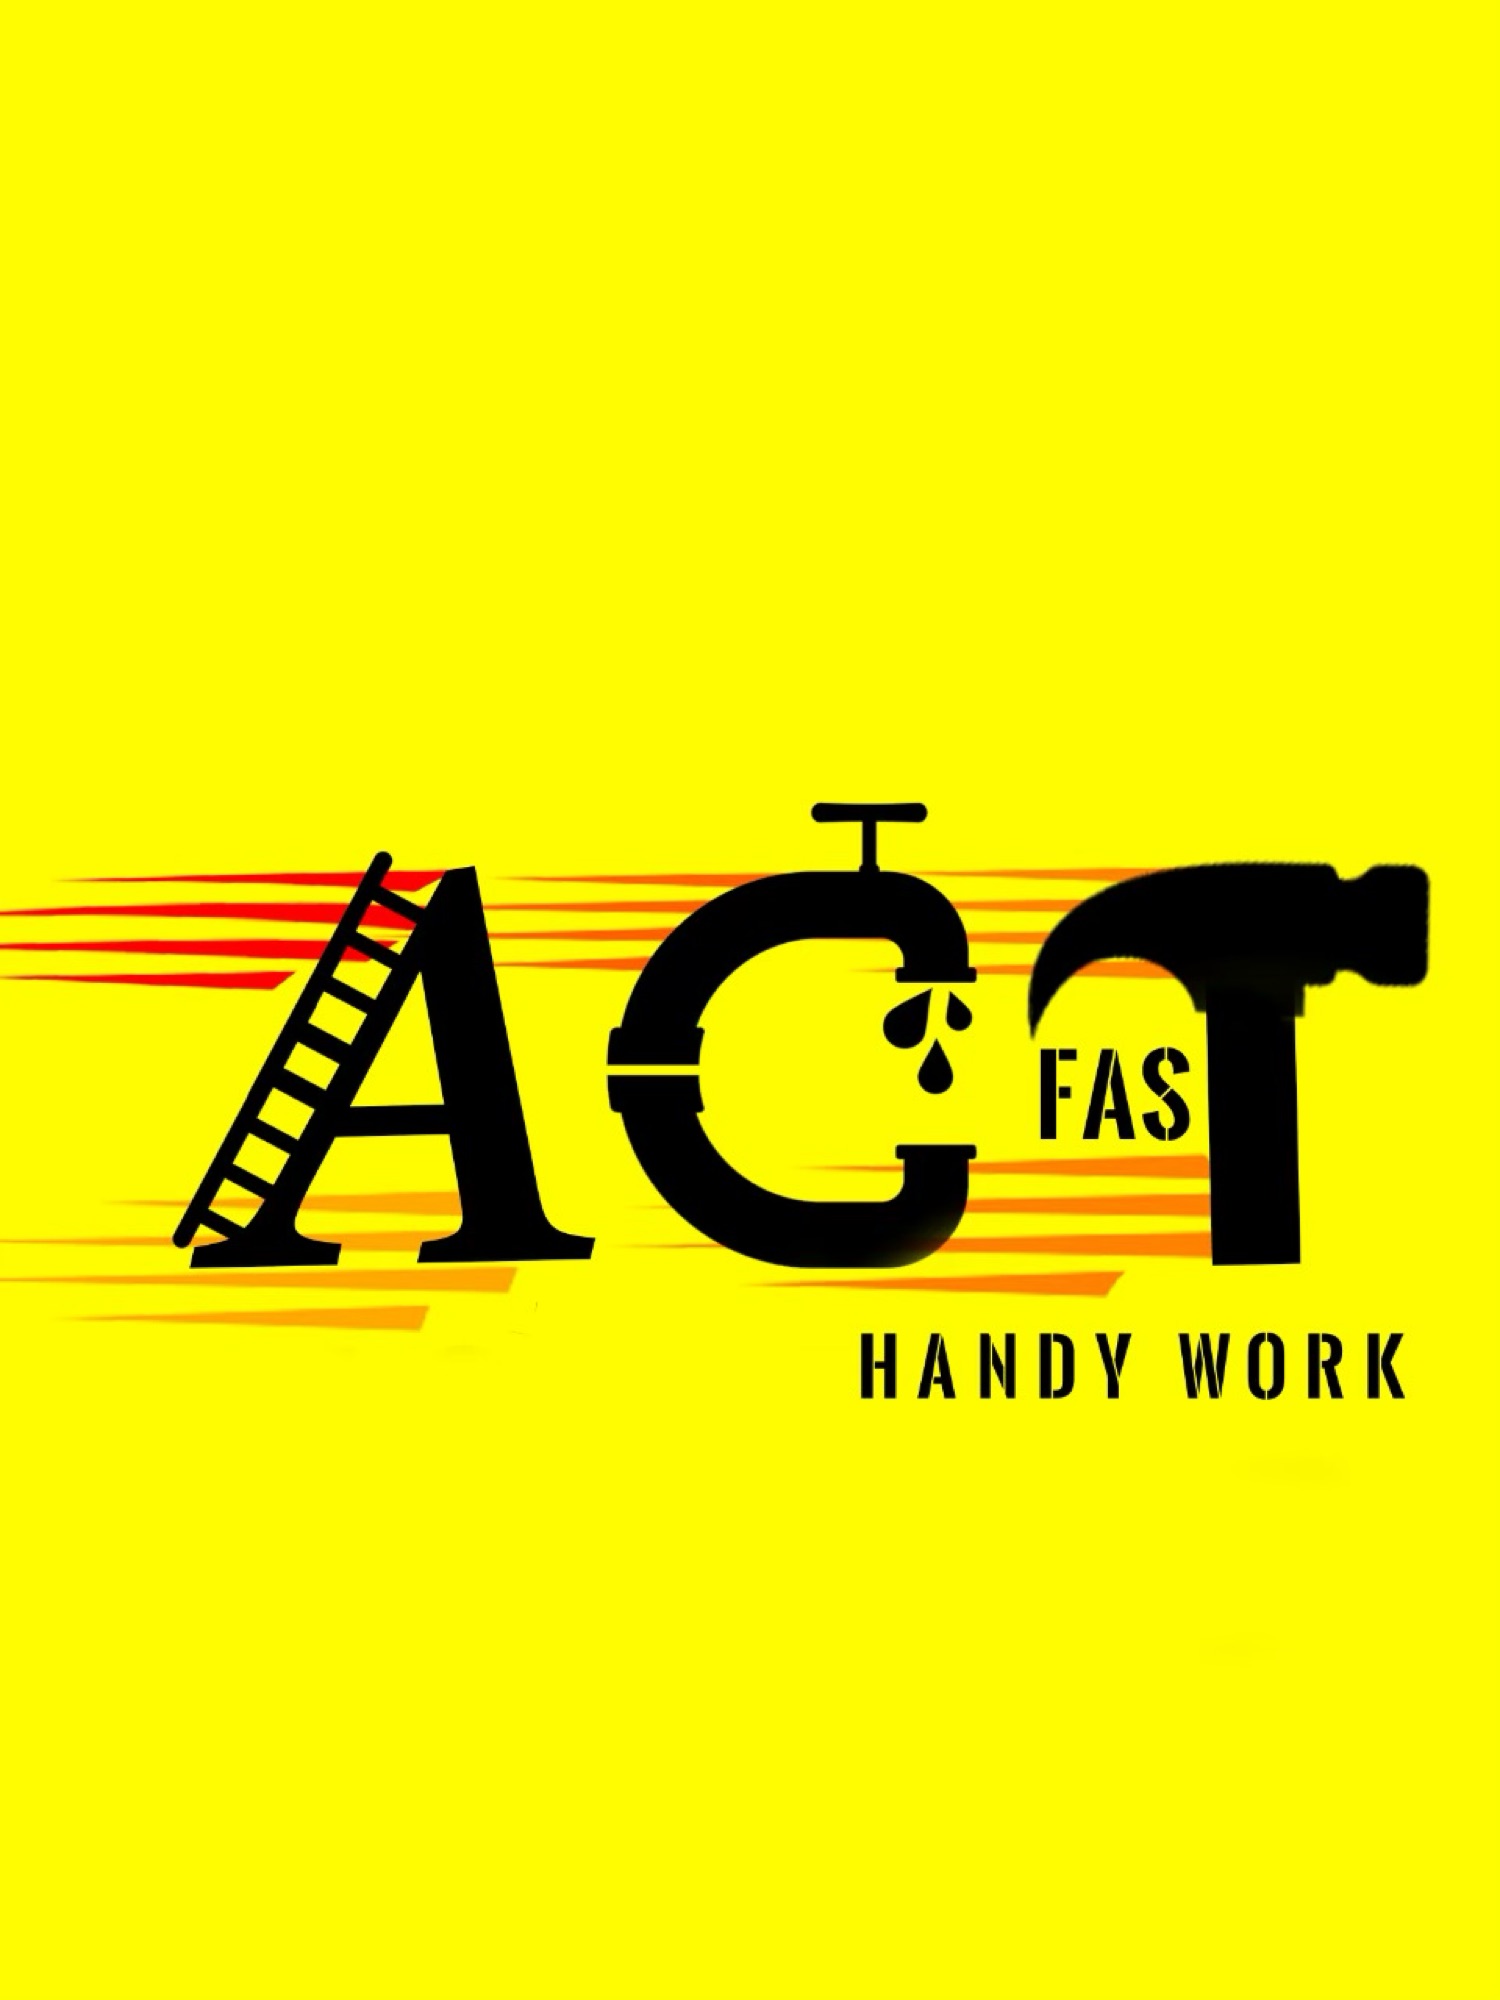 ACT Fast Handy Work Logo